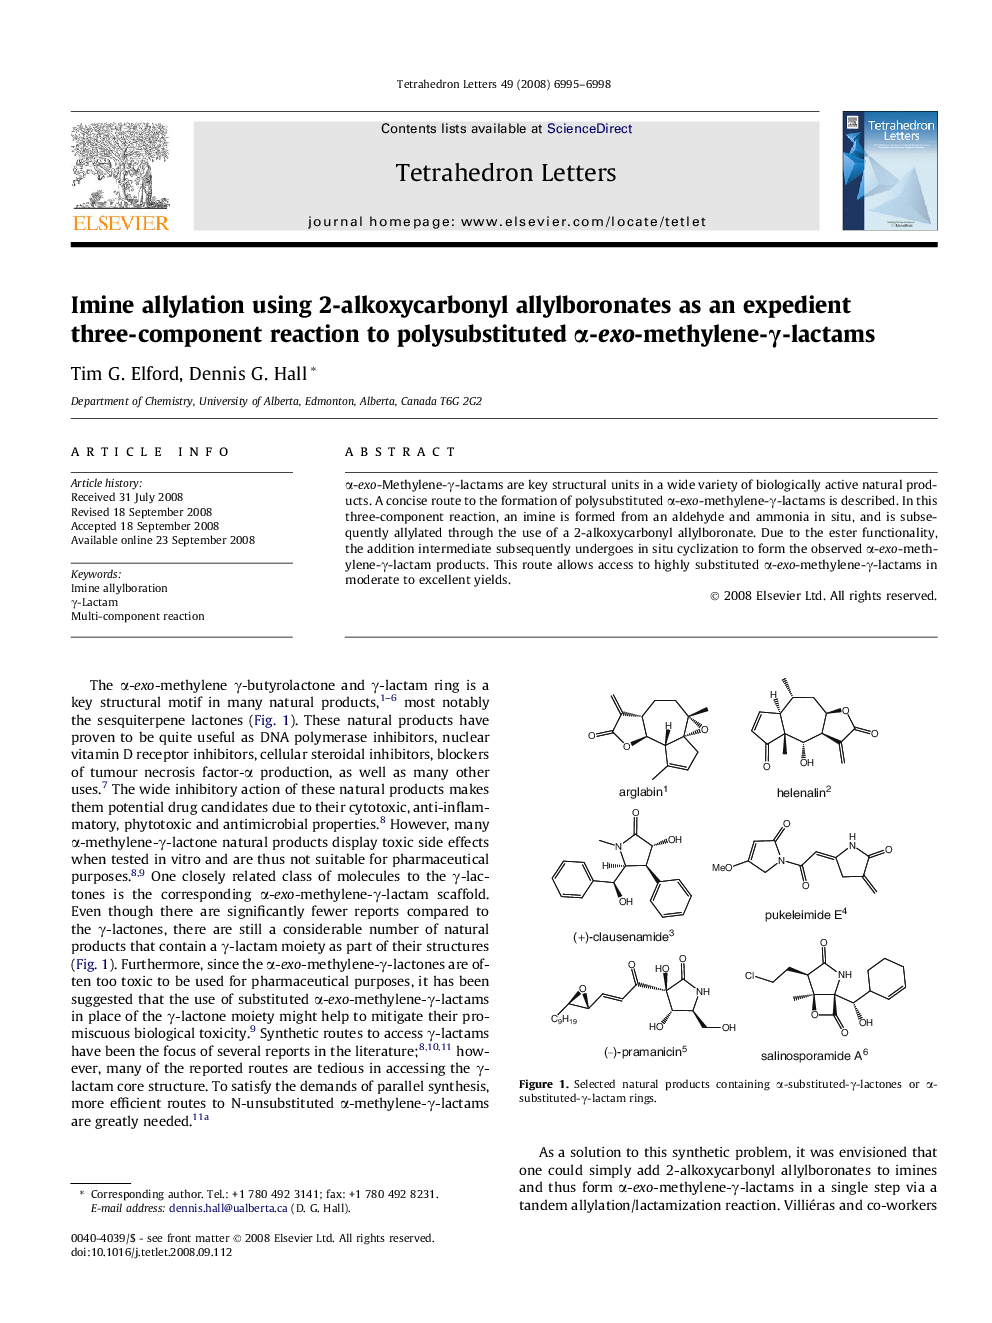 Imine allylation using 2-alkoxycarbonyl allylboronates as an expedient three-component reaction to polysubstituted Î±-exo-methylene-Î³-lactams